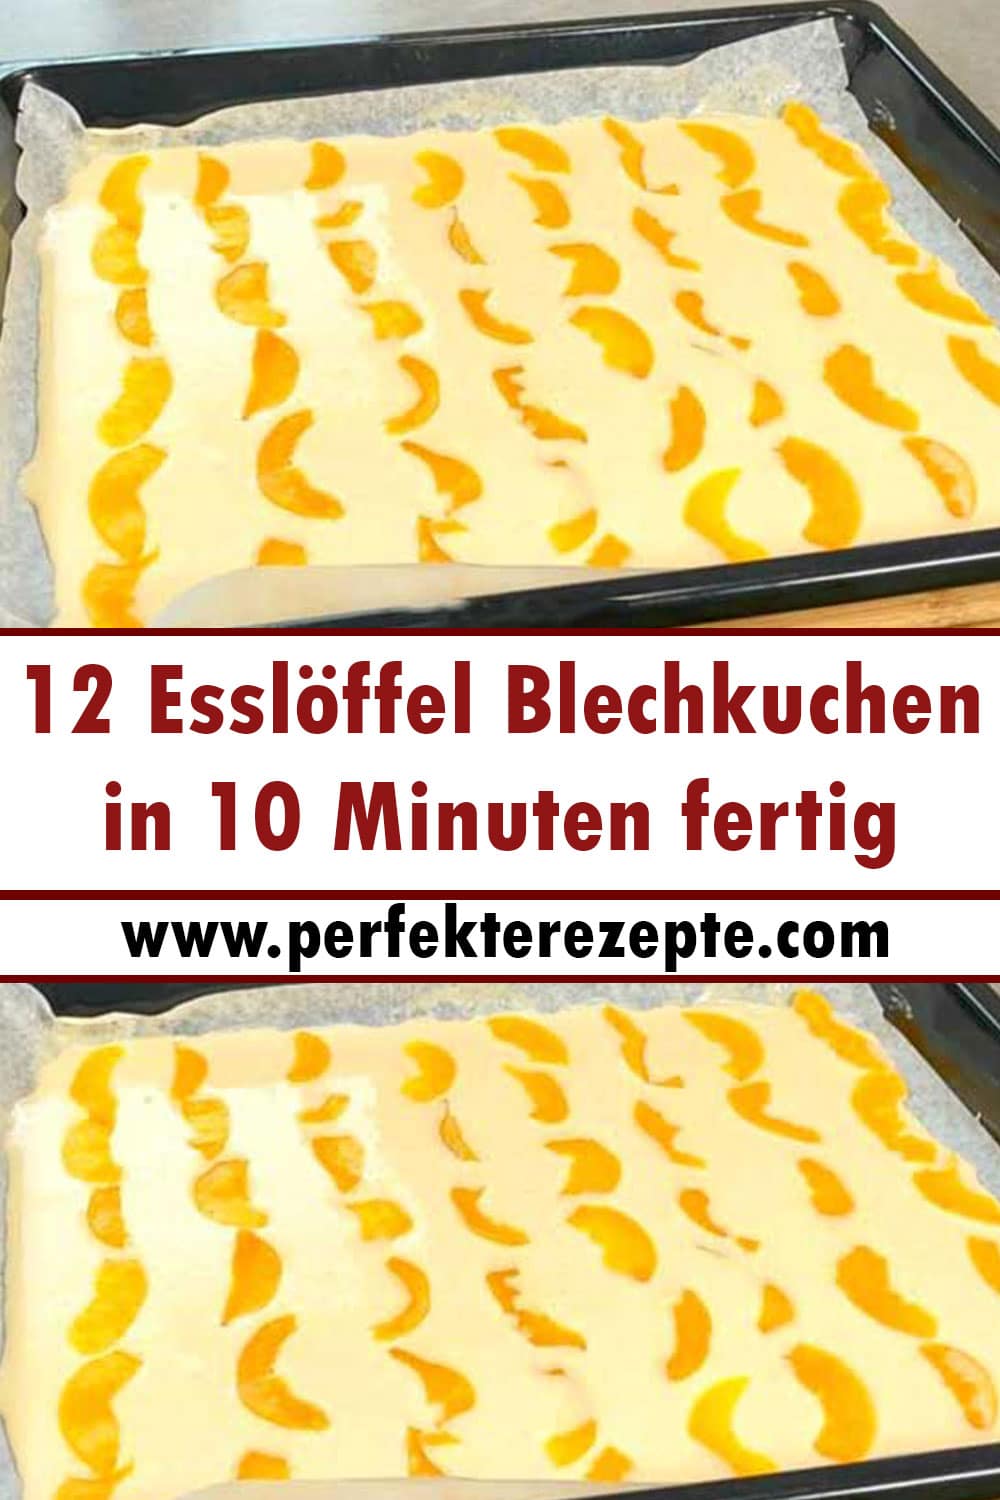 12 Esslöffel Blechkuchen Rezept in 10 Minuten fertig, inklusive Backzeit